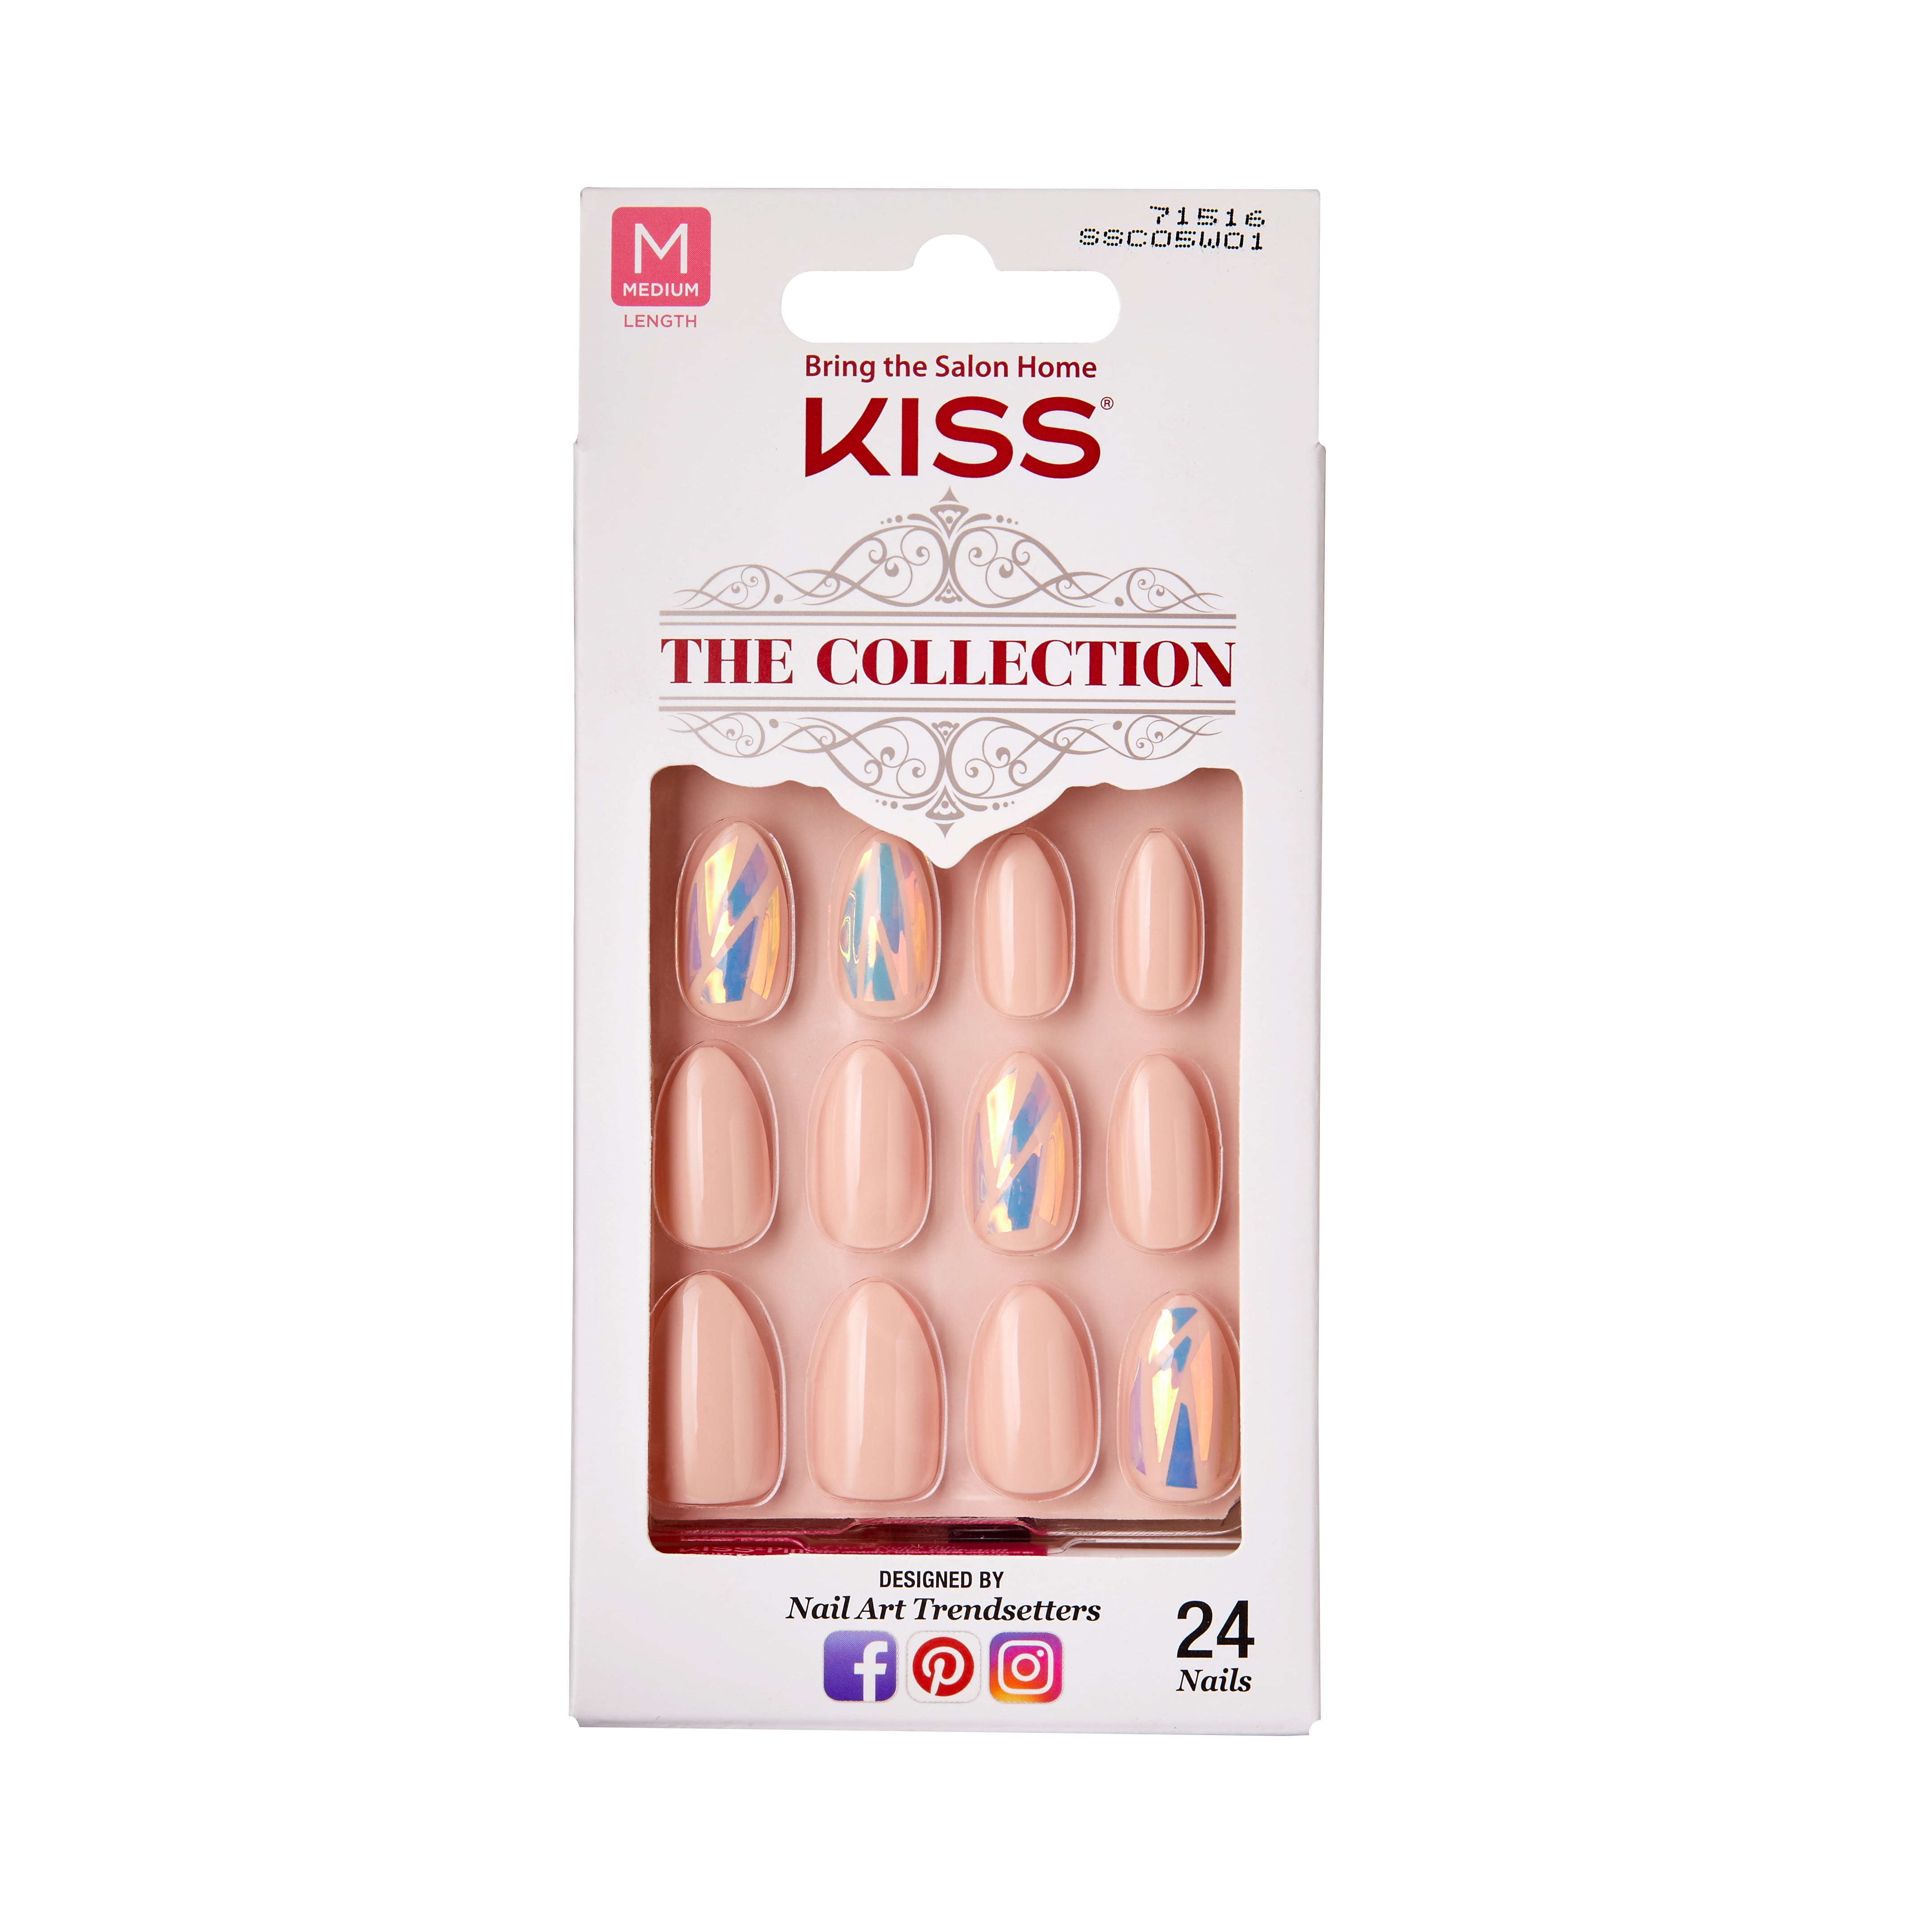 KISS The Collection Nails, Luminary - Walmart.com - Walmart.com